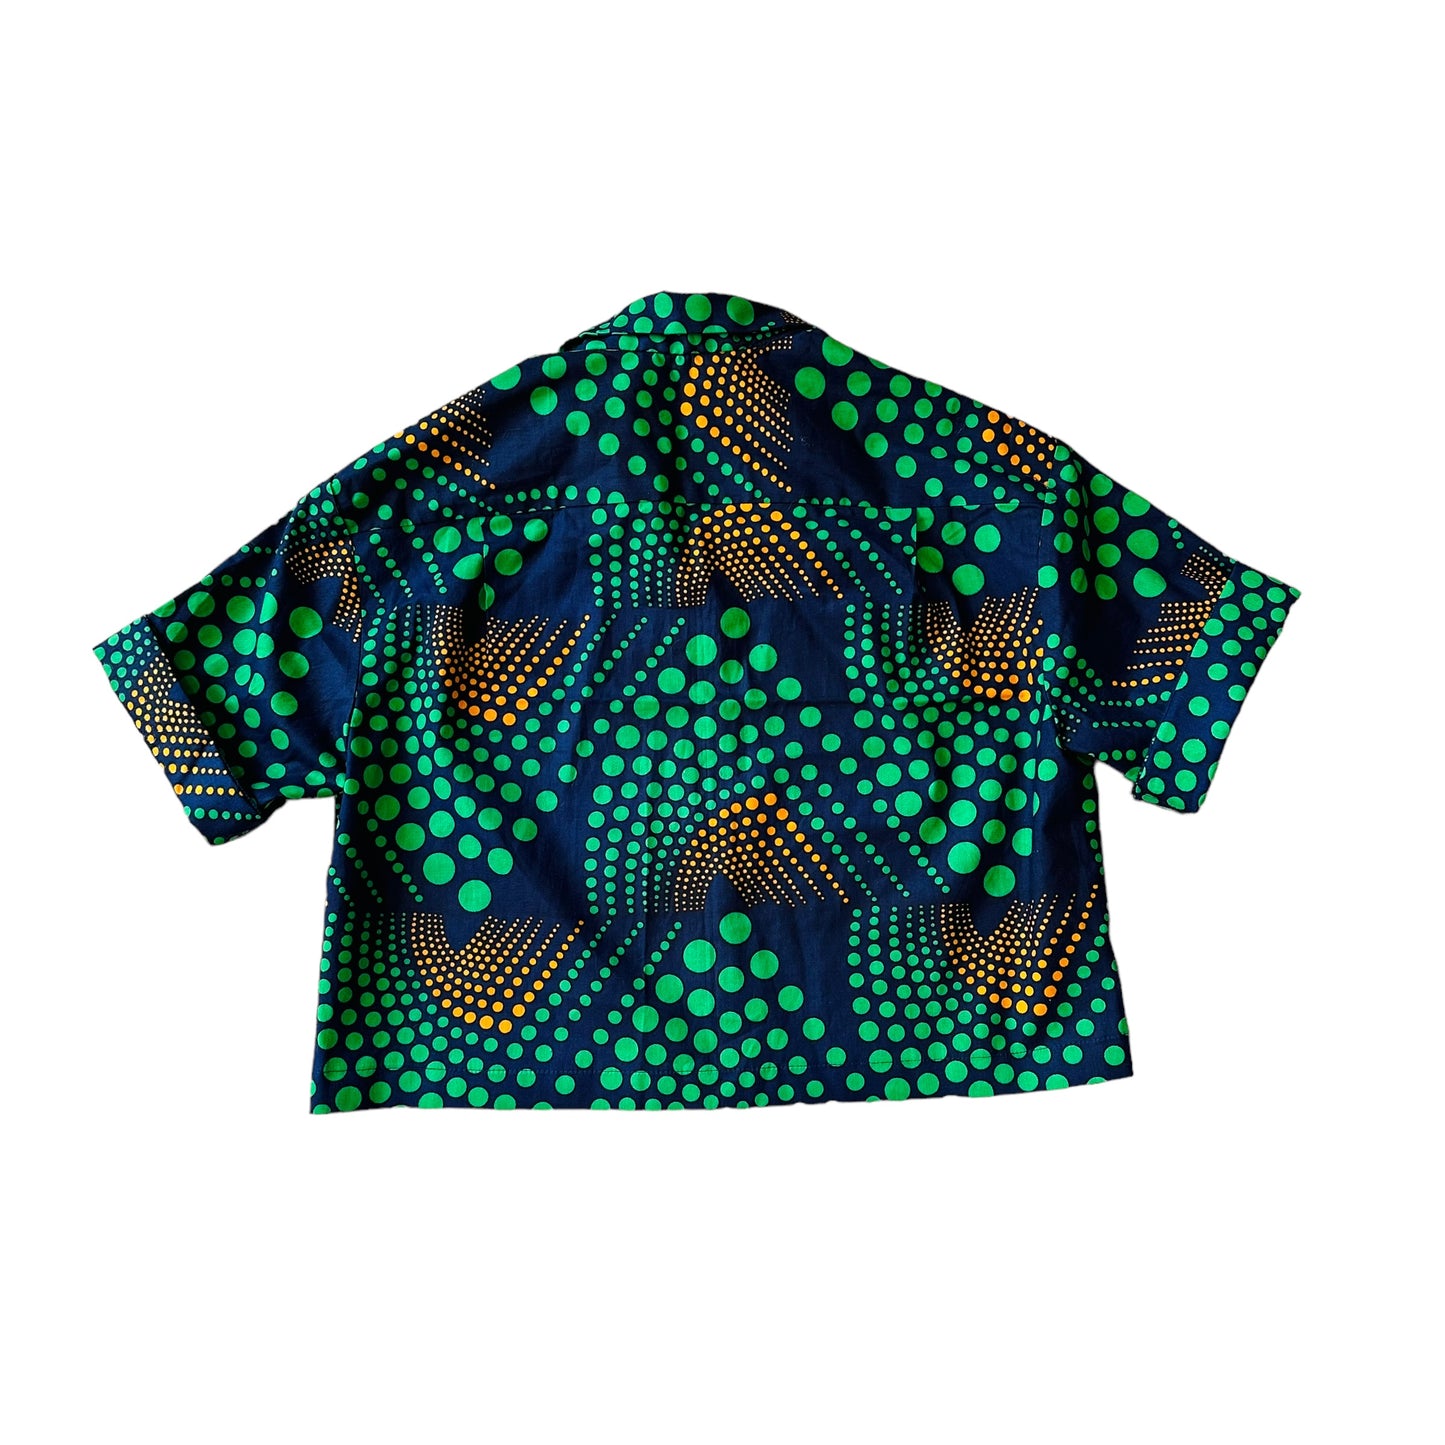 Venice Hawaiian shirt in Chameleon